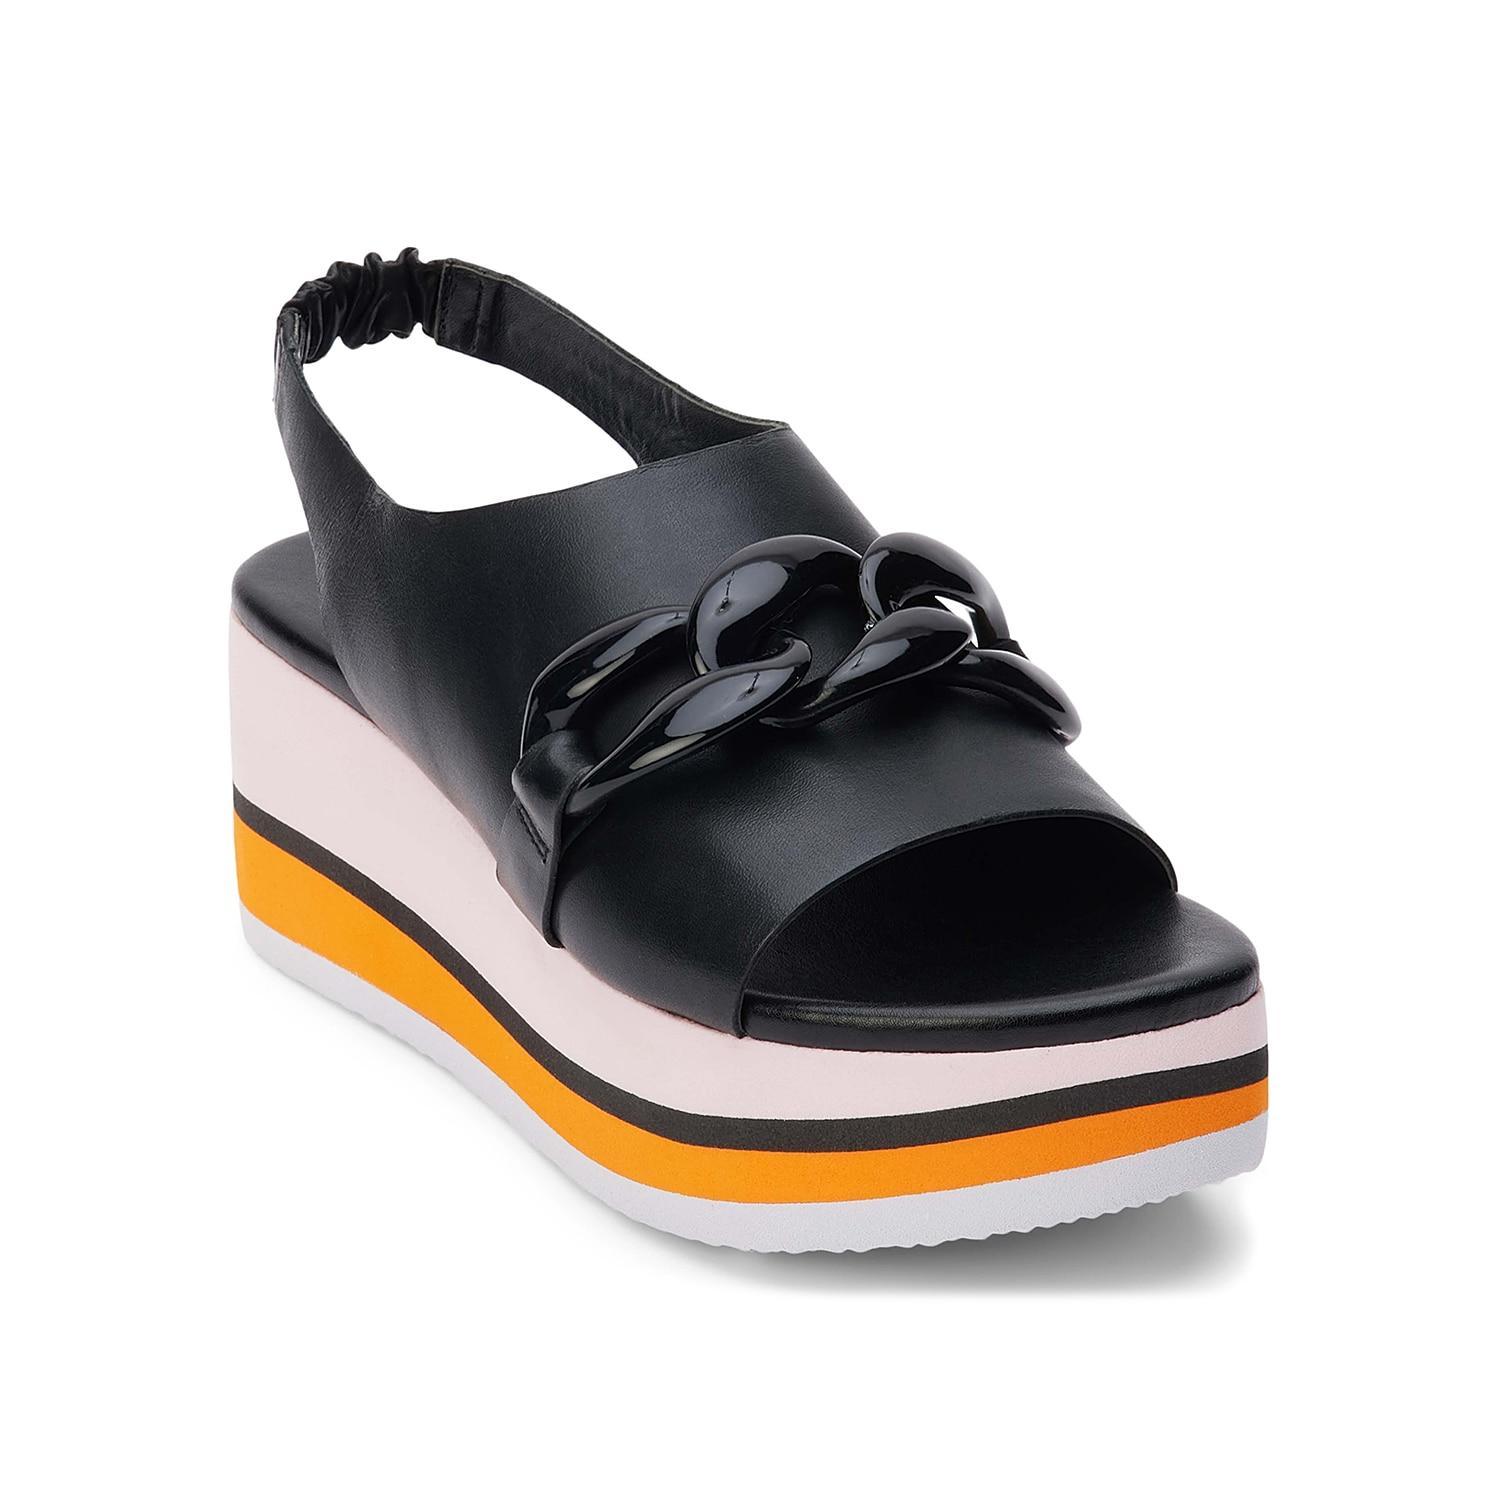 Matisse Natalia Platform Sandals Product Image